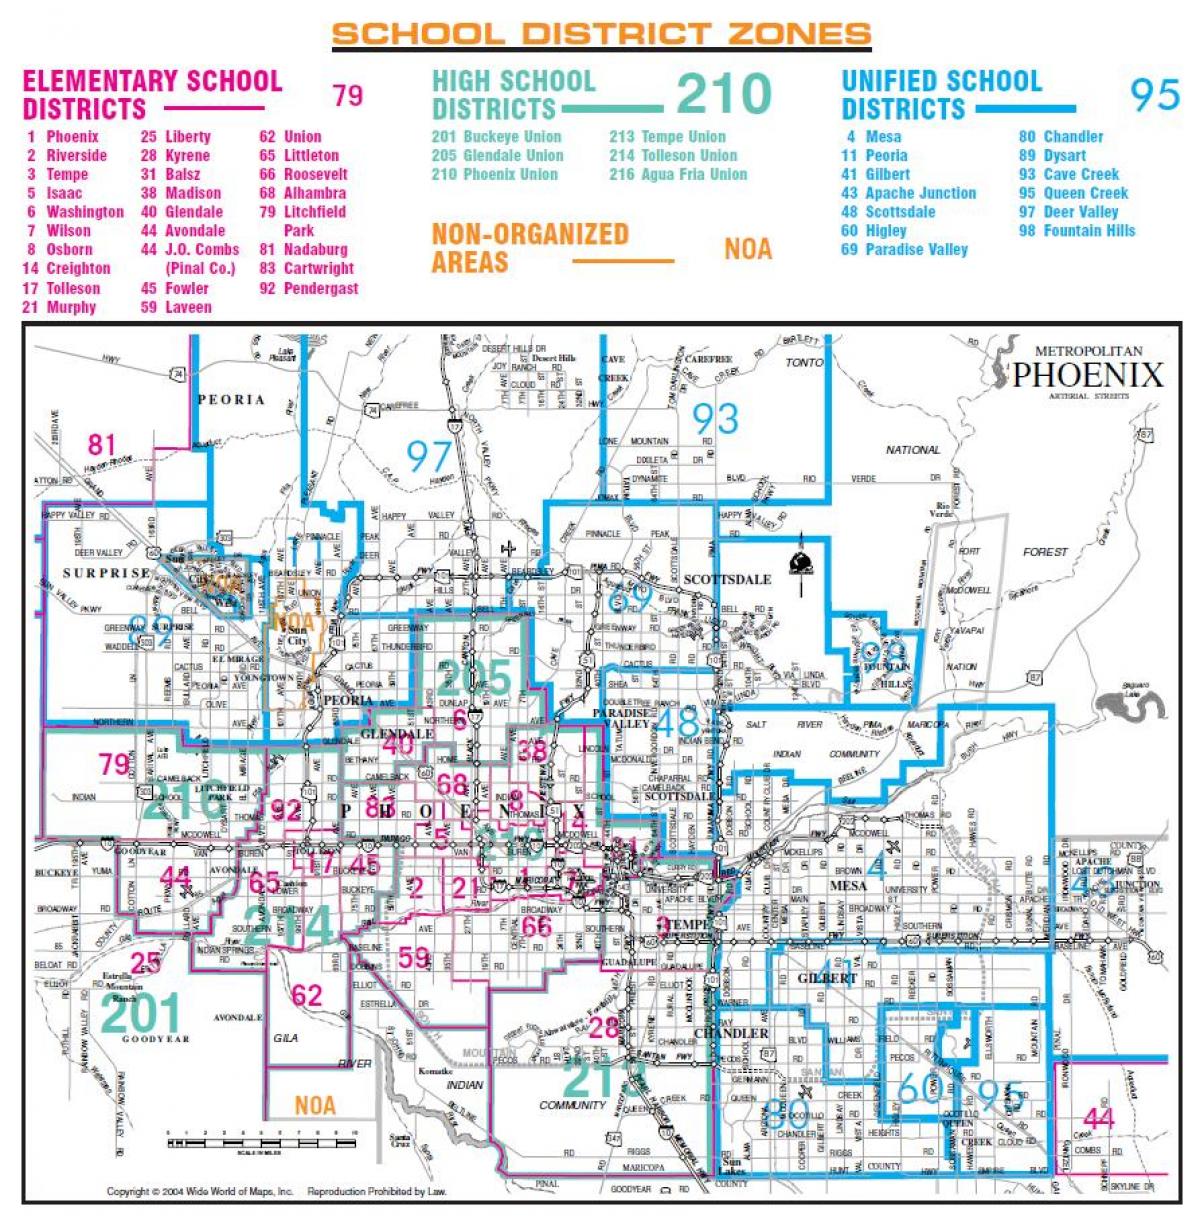 Phoenix sąjungos high school district žemėlapyje